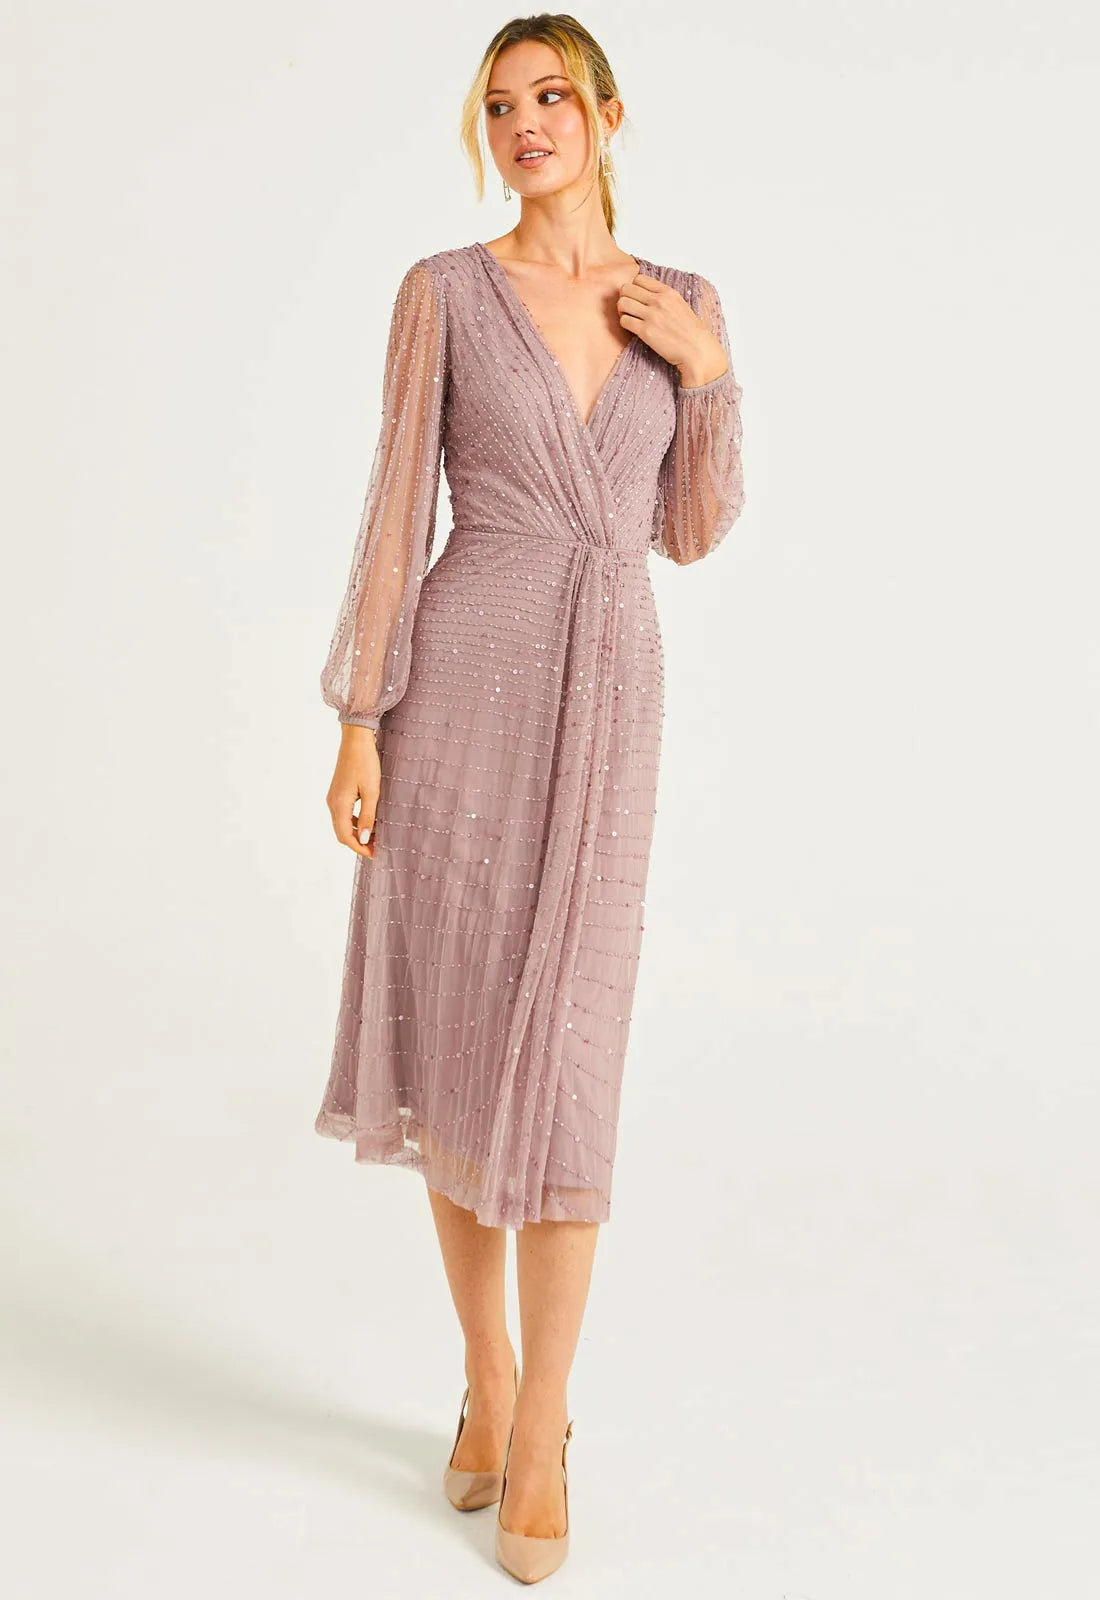 AngelEye Lavender Mesh Sleeve Sequin Dress